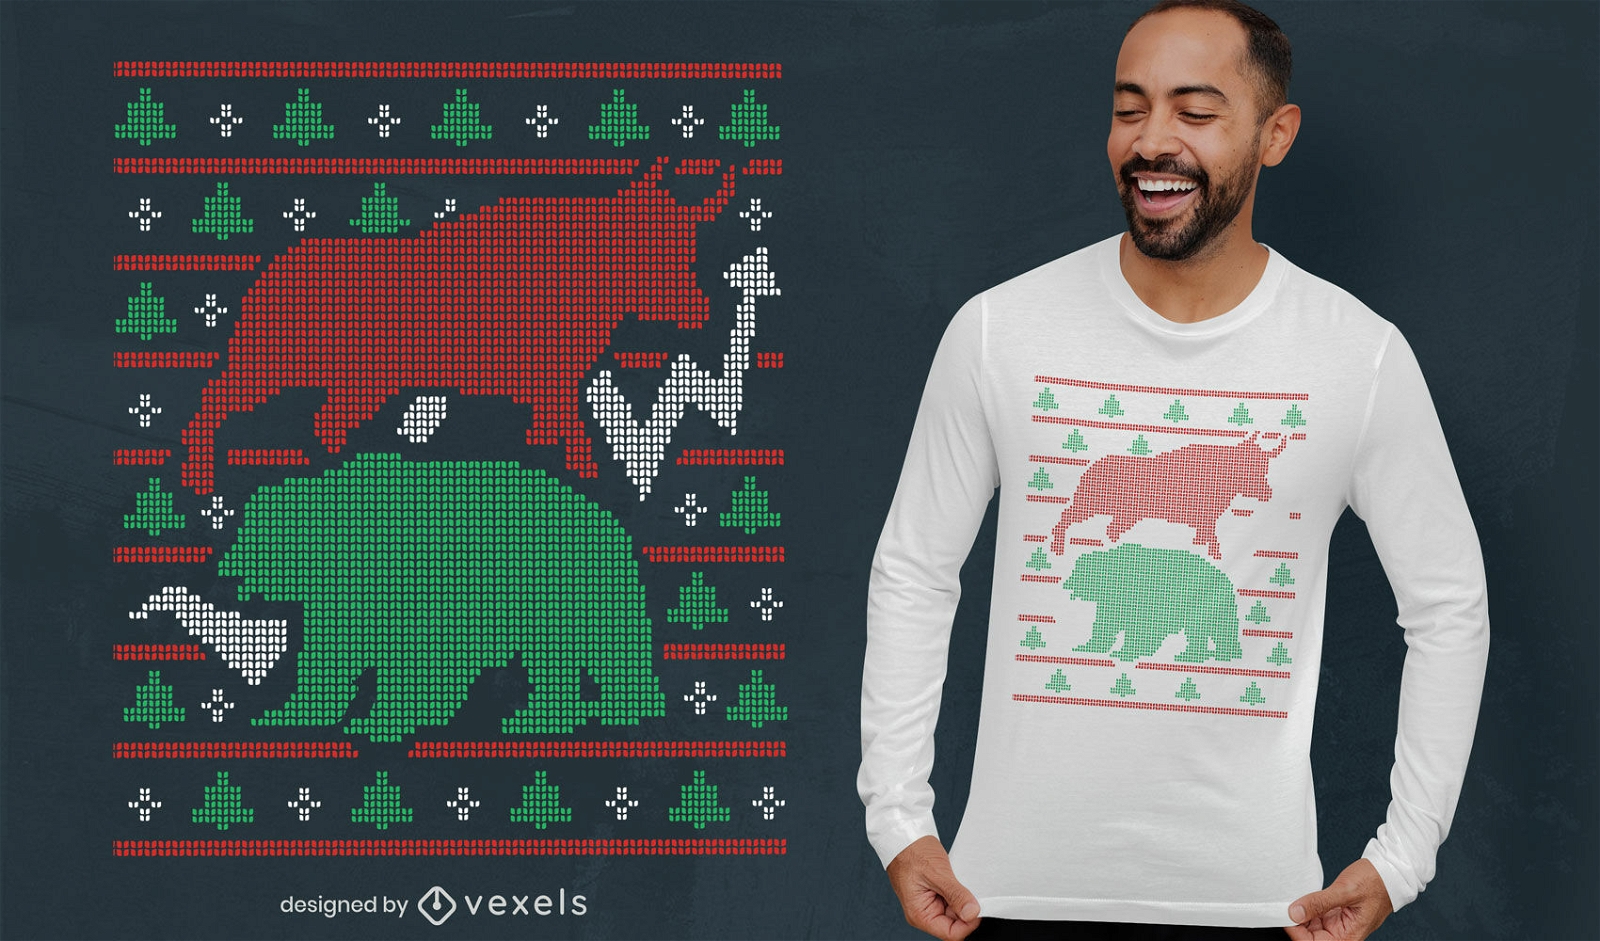 Stocks market animals ugly sweater t-shirt design